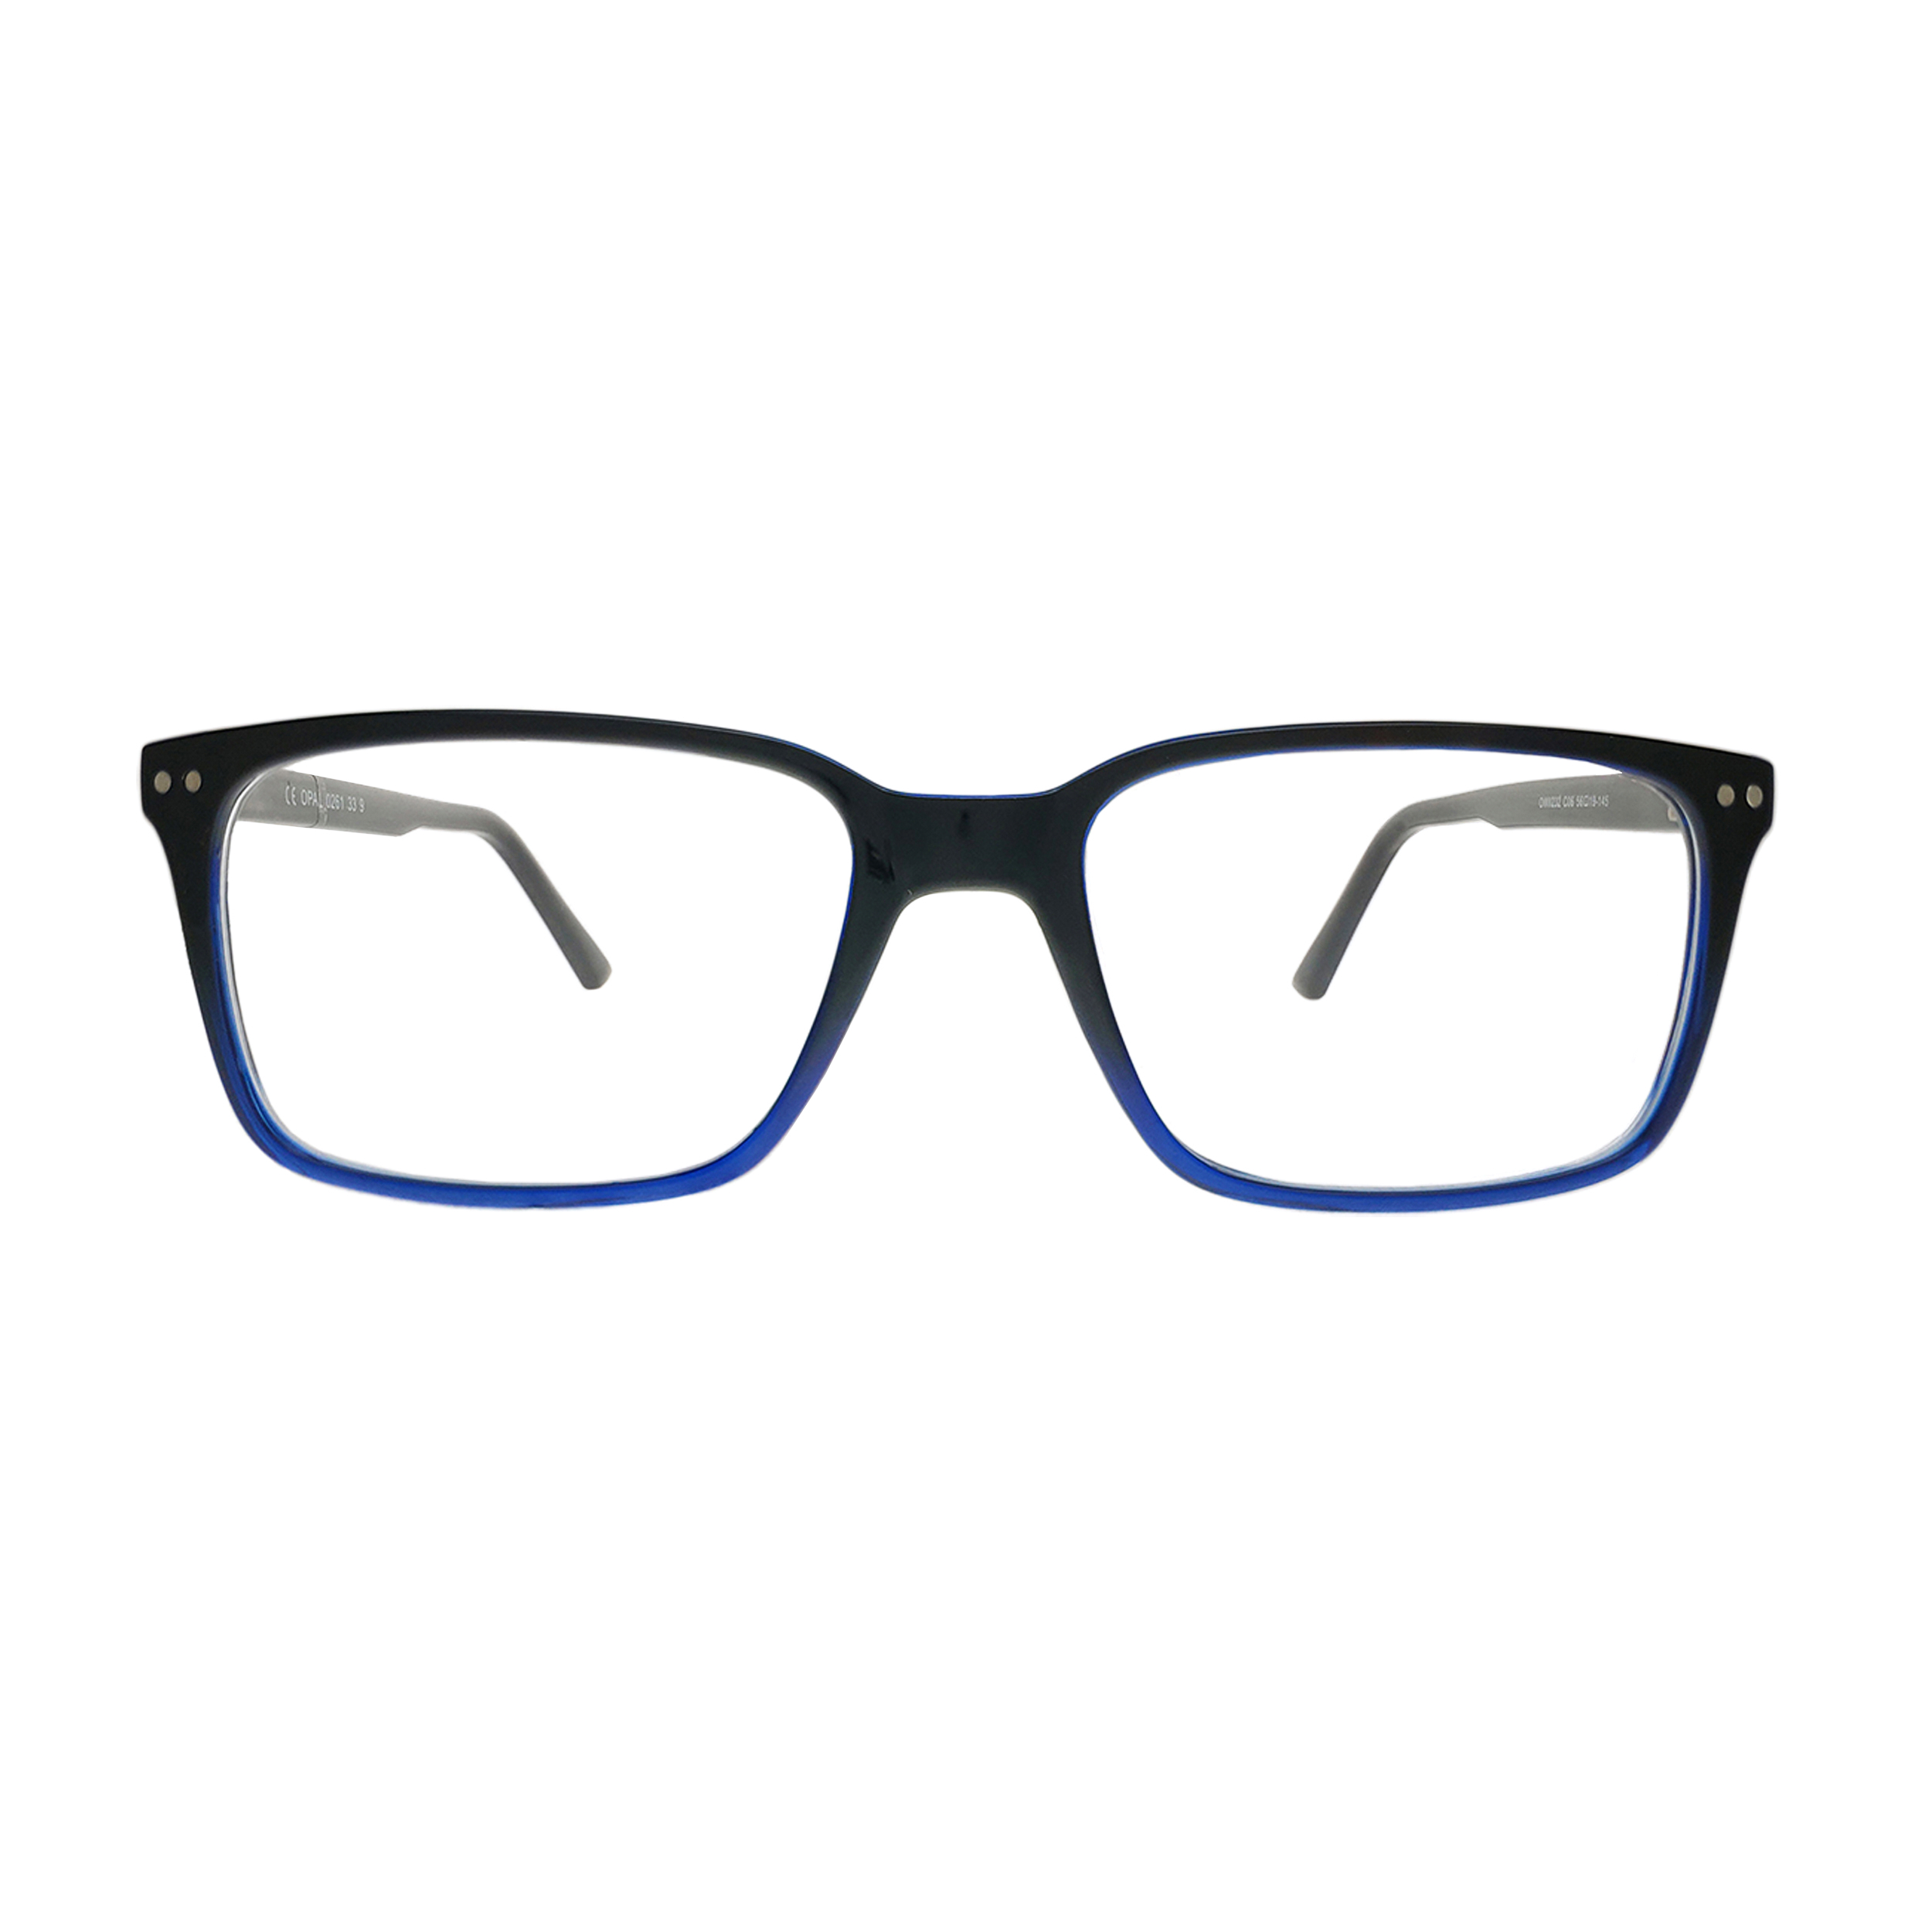 فریم عینک طبی اوپال مدل 839-1514 - OWII232C06 - 65.19.145